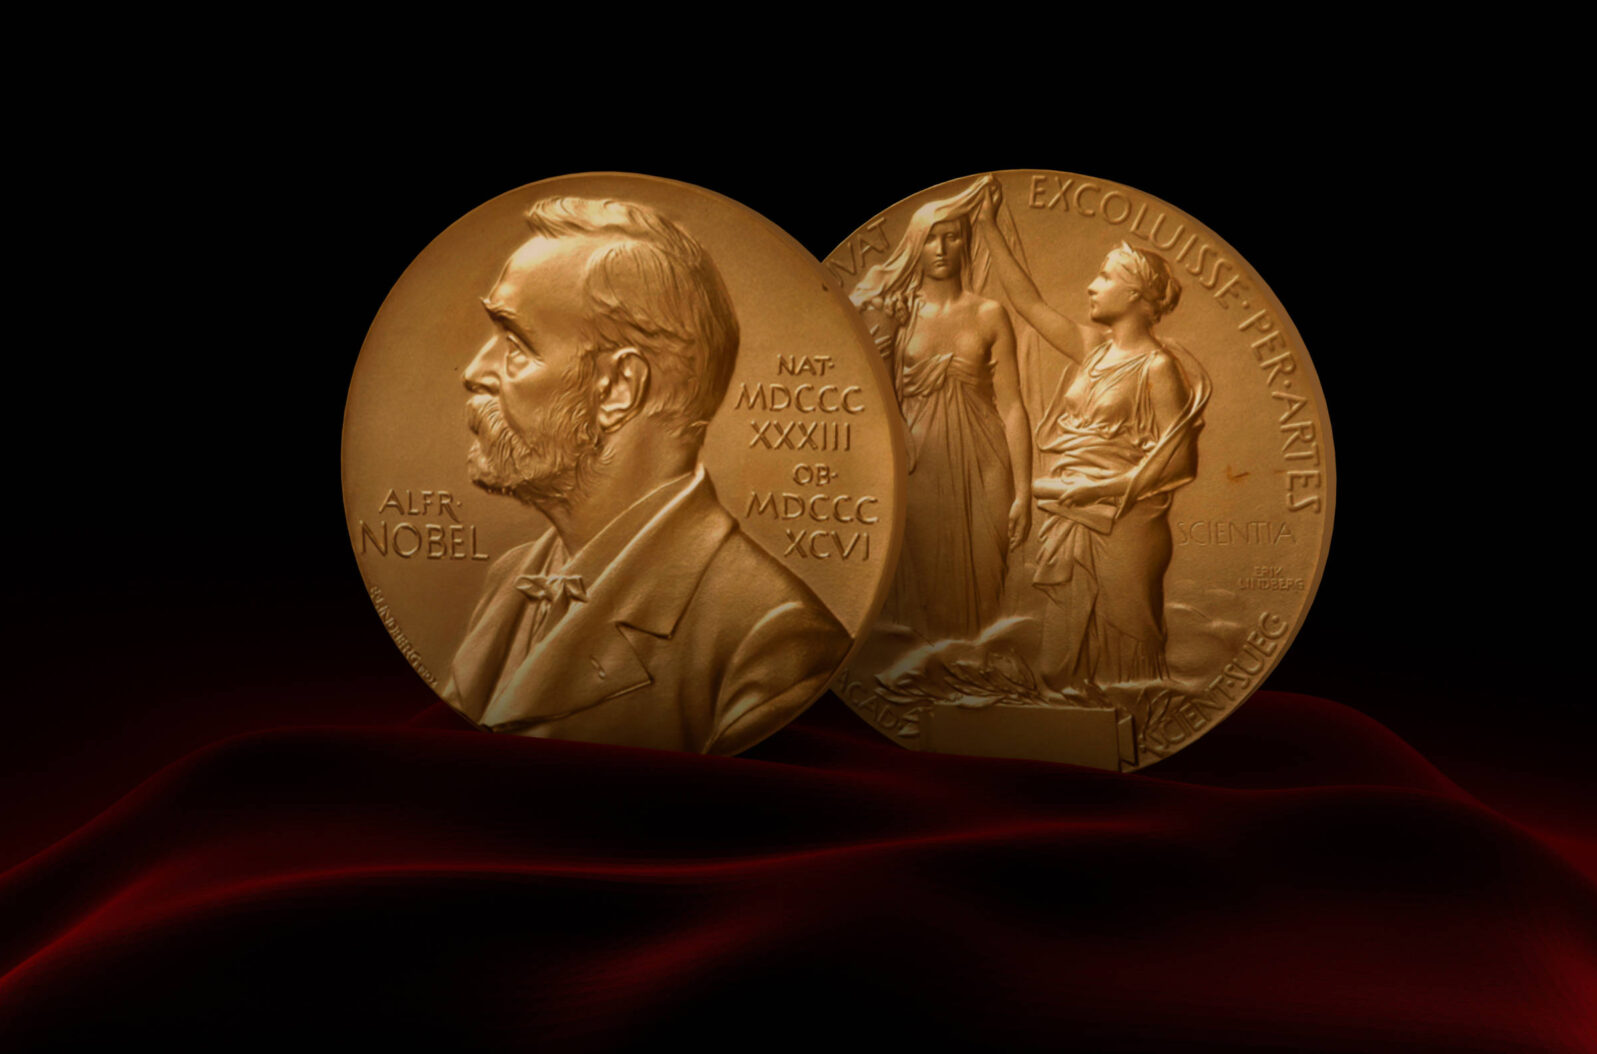 Alfred Nobel Prize